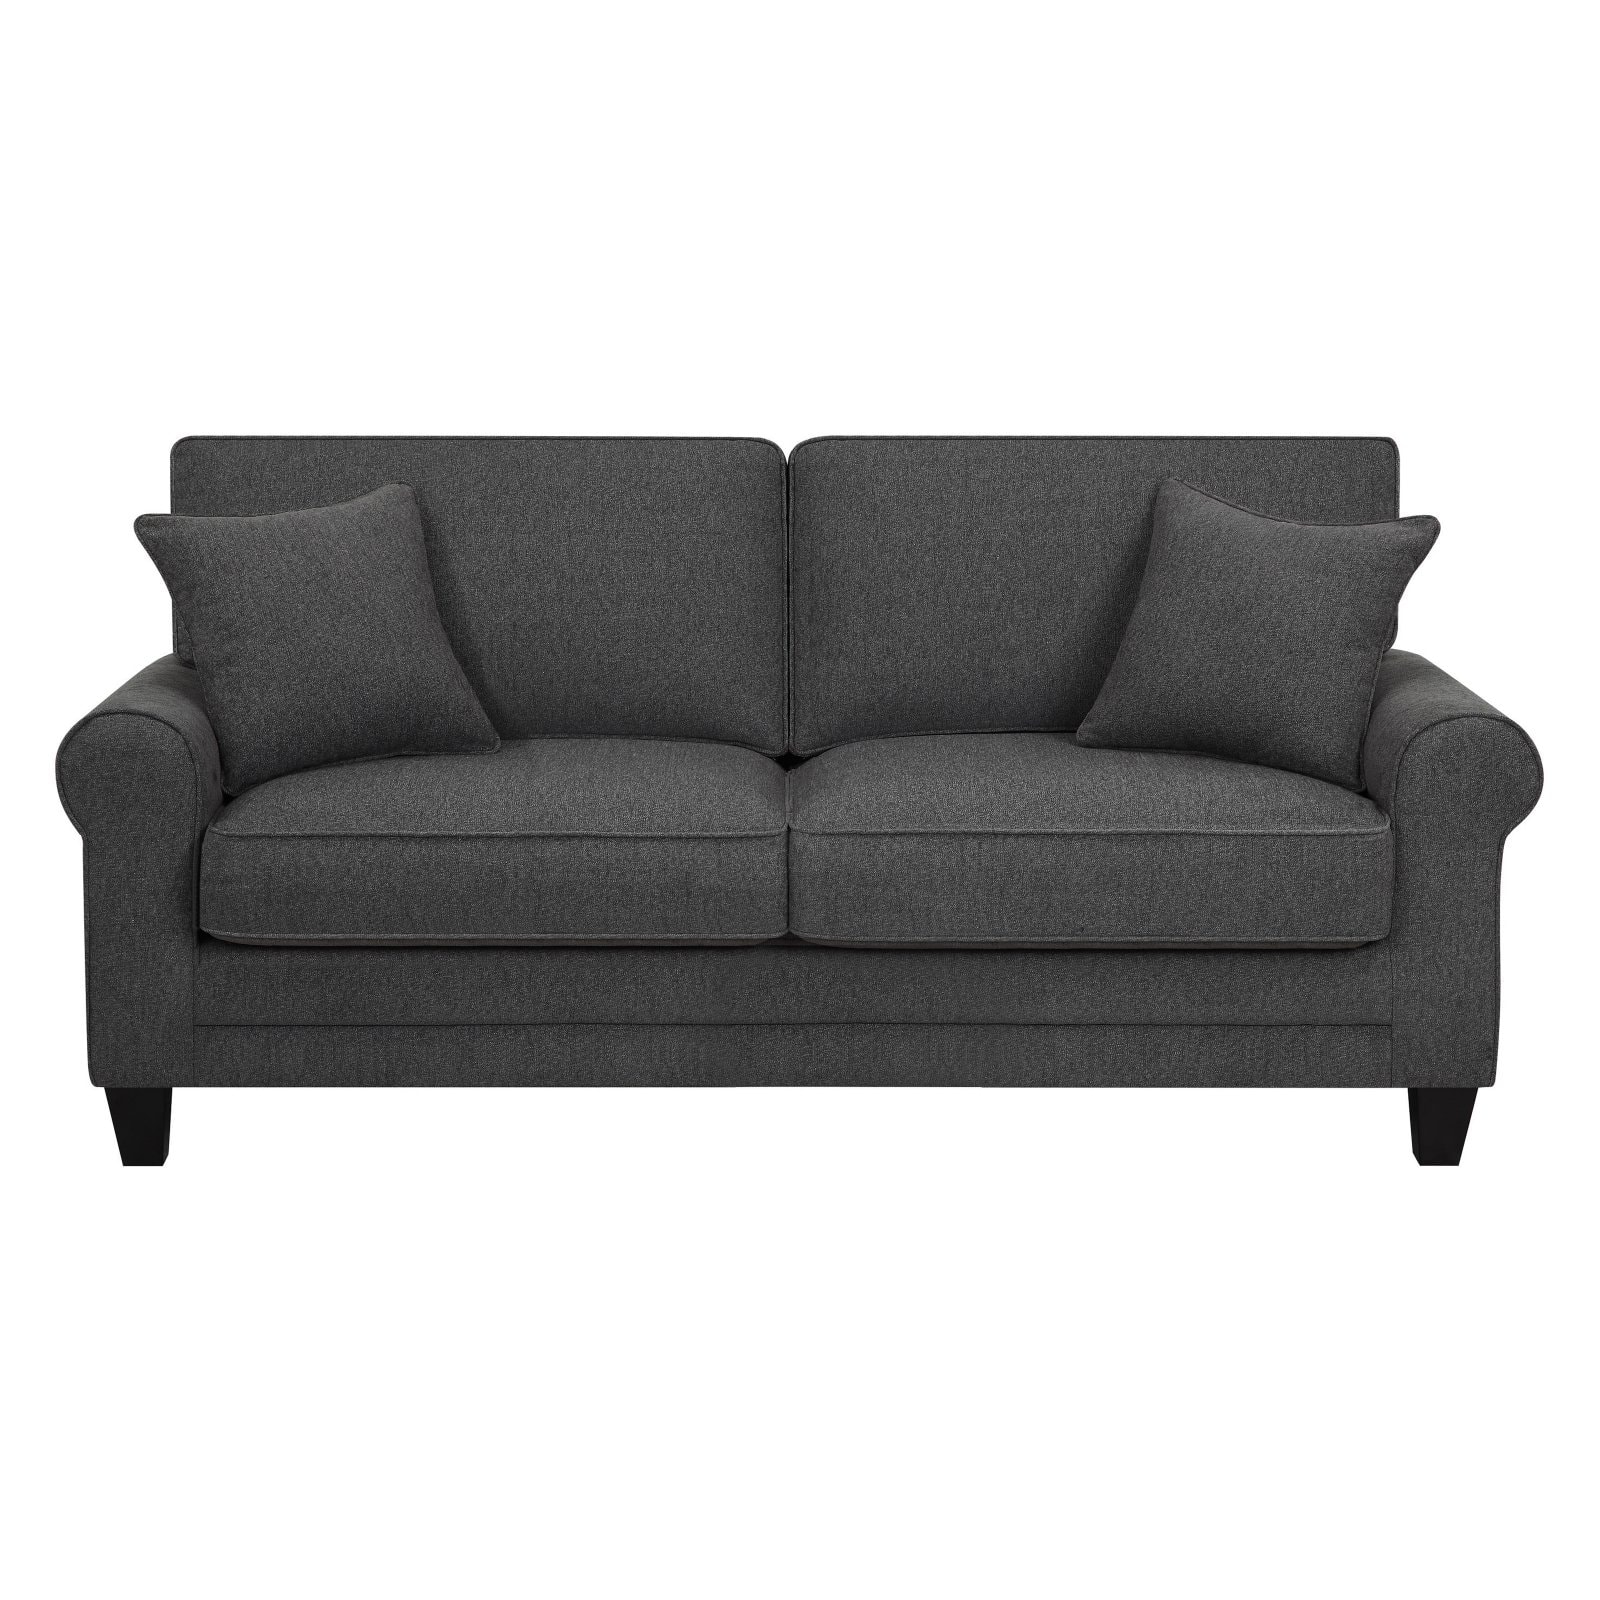 Serta Copenhagen 73" Sofa in Gray - image 1 of 9